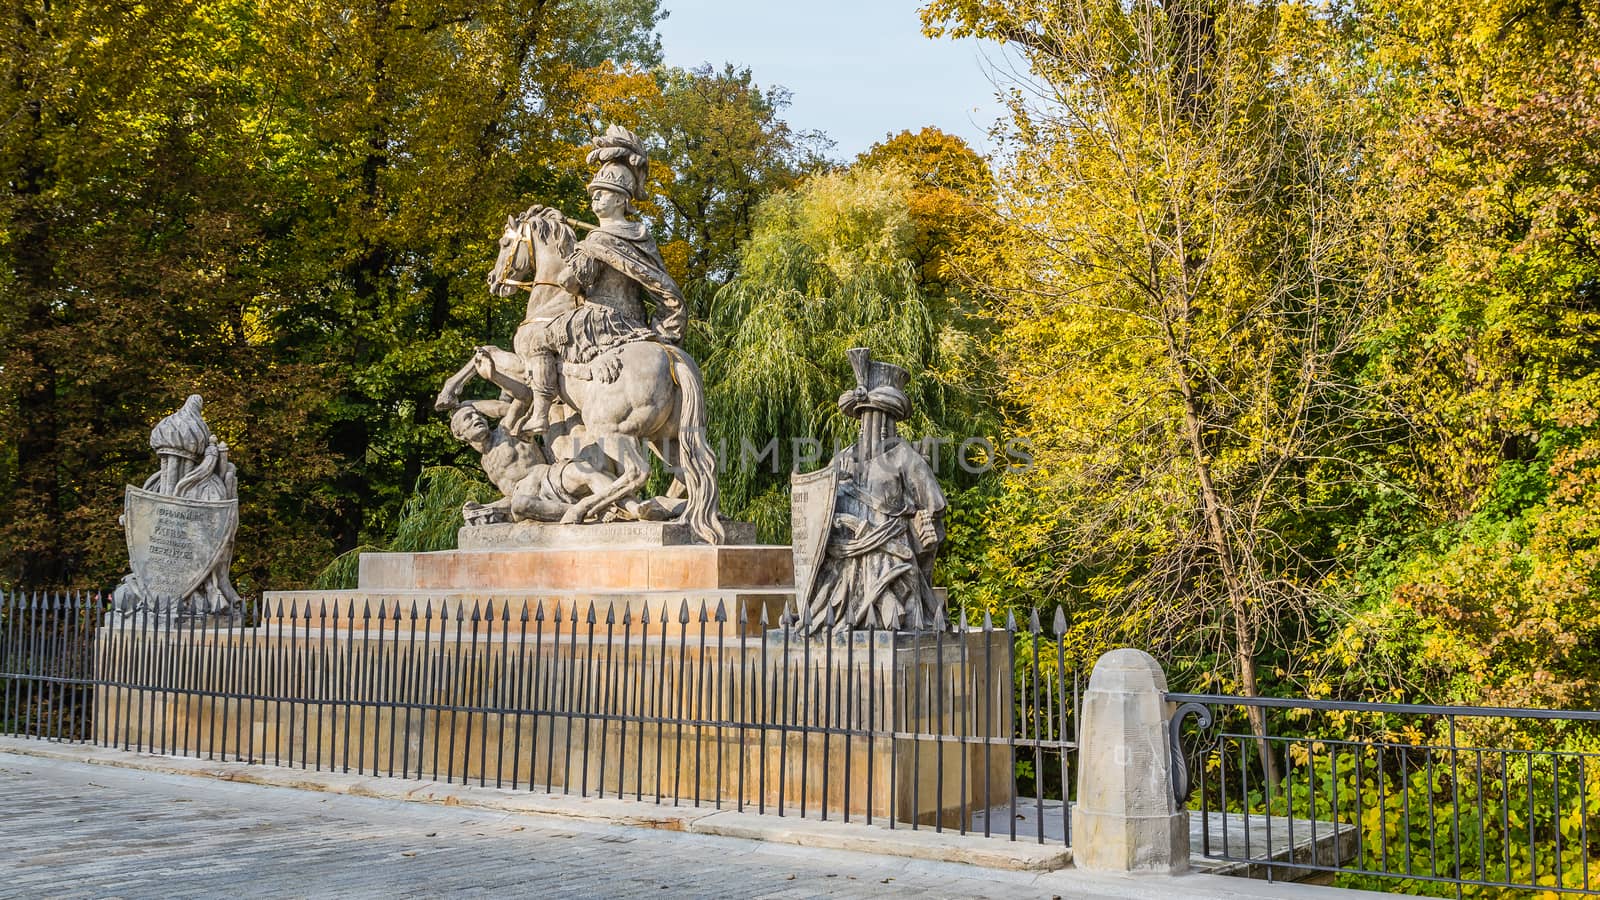 Monument to Polish king Jan III Sobieski in the Lazienki Park (Royal Baths) in Warsaw, Poland.